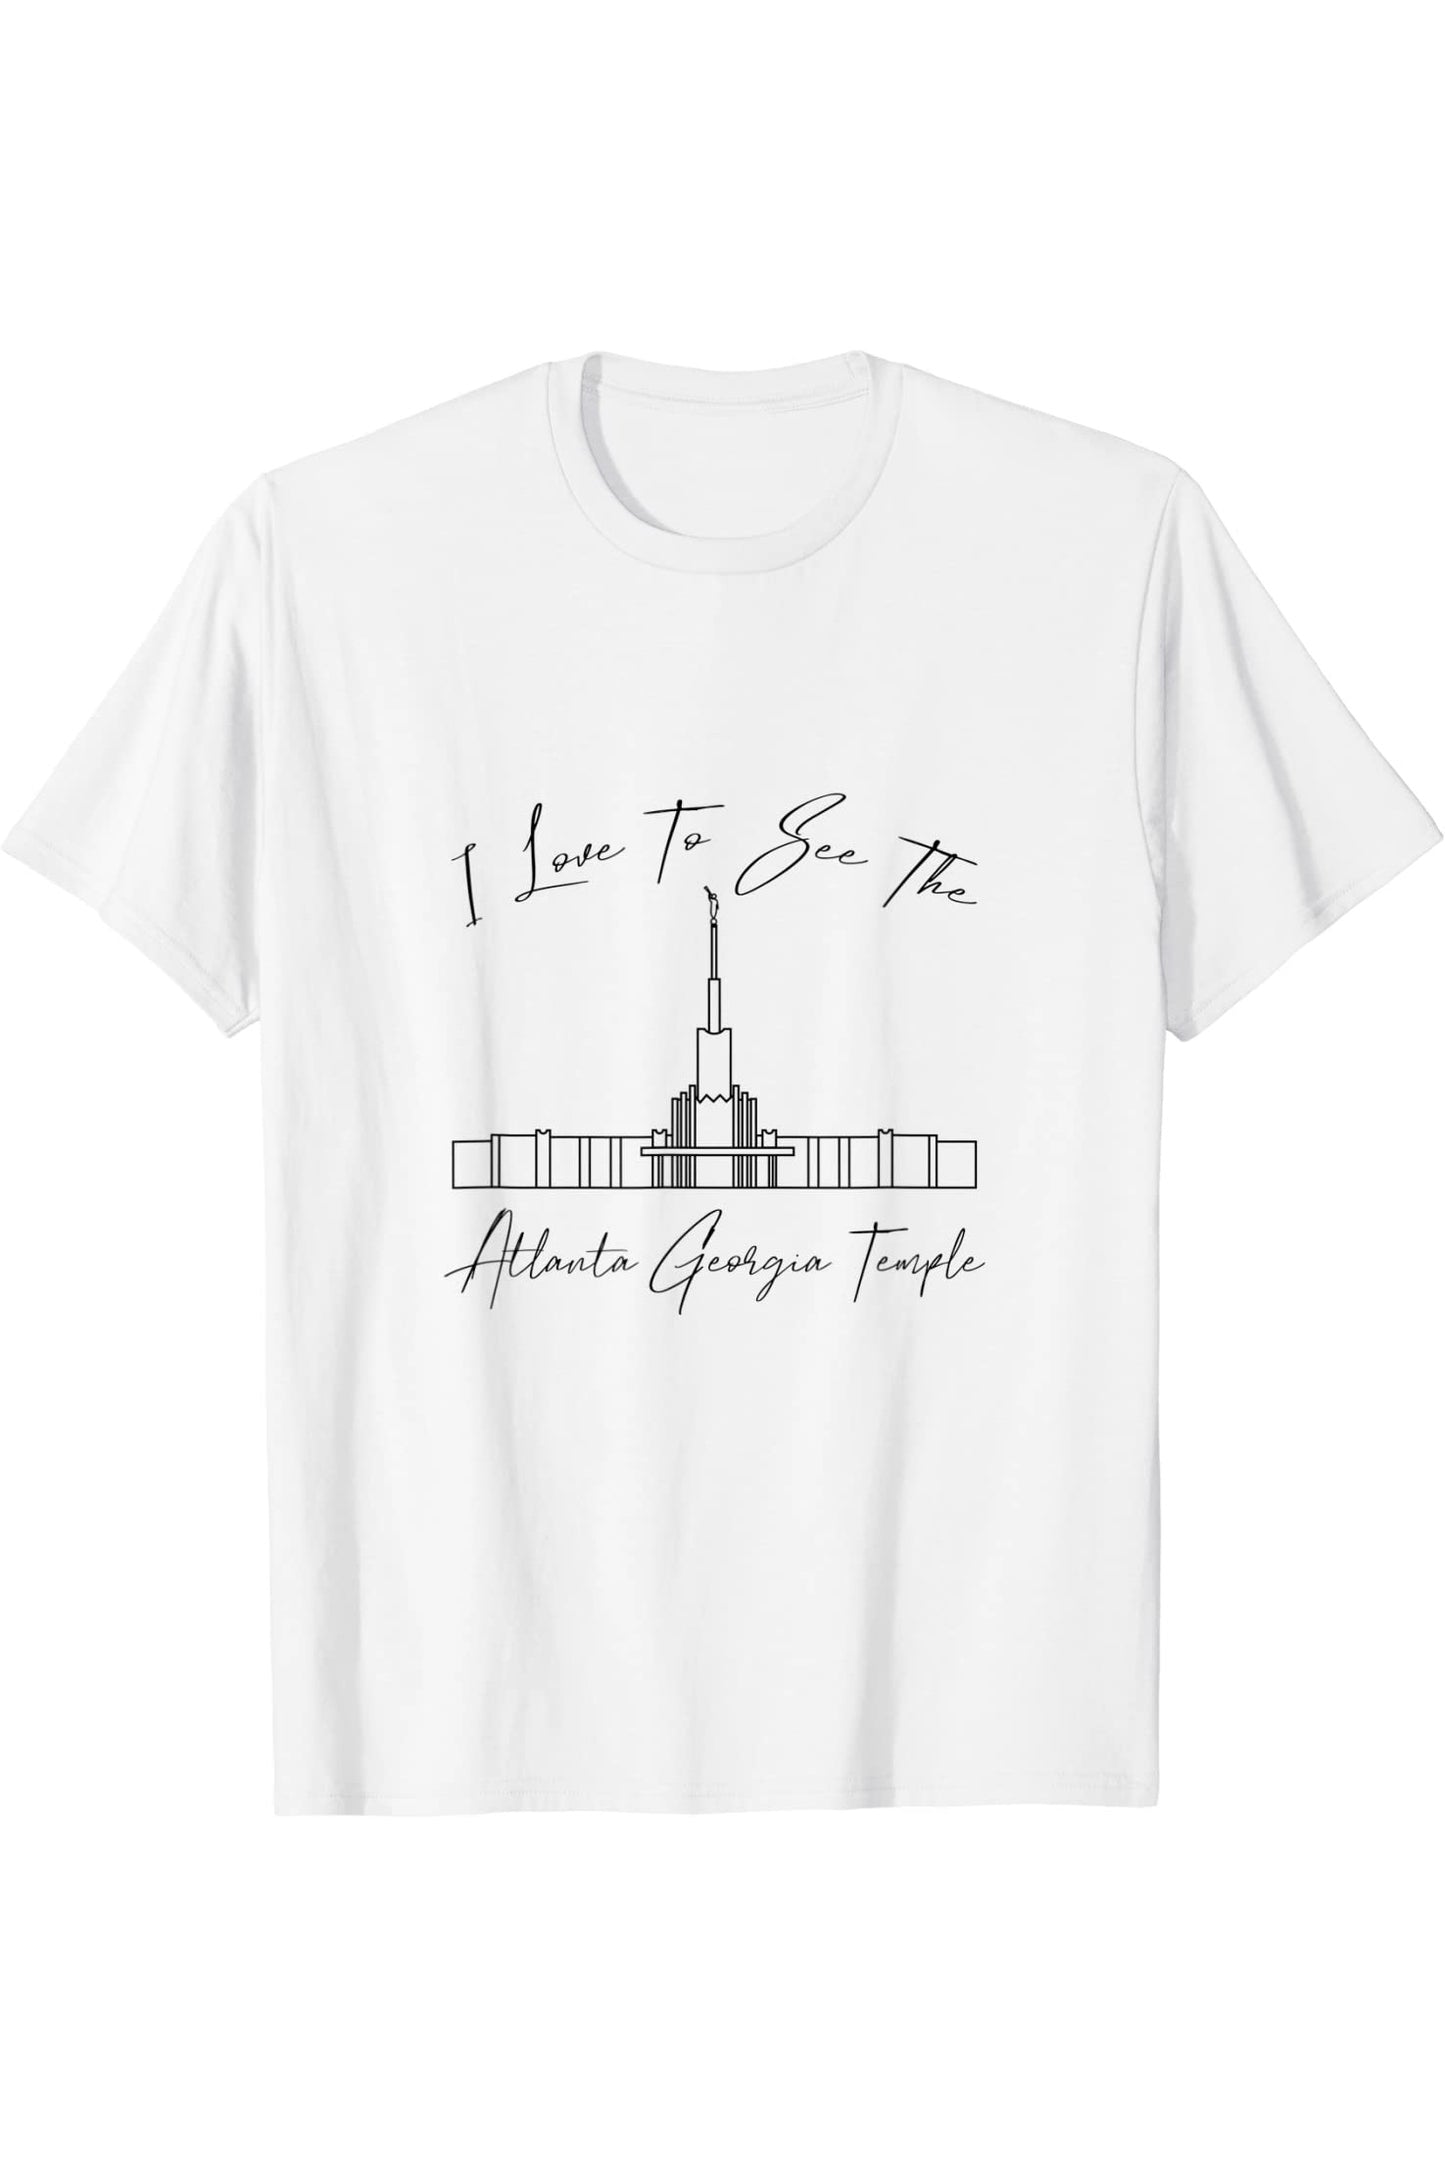 Atlanta Georgia Temple T-Shirt - Calligraphy Style (English) US